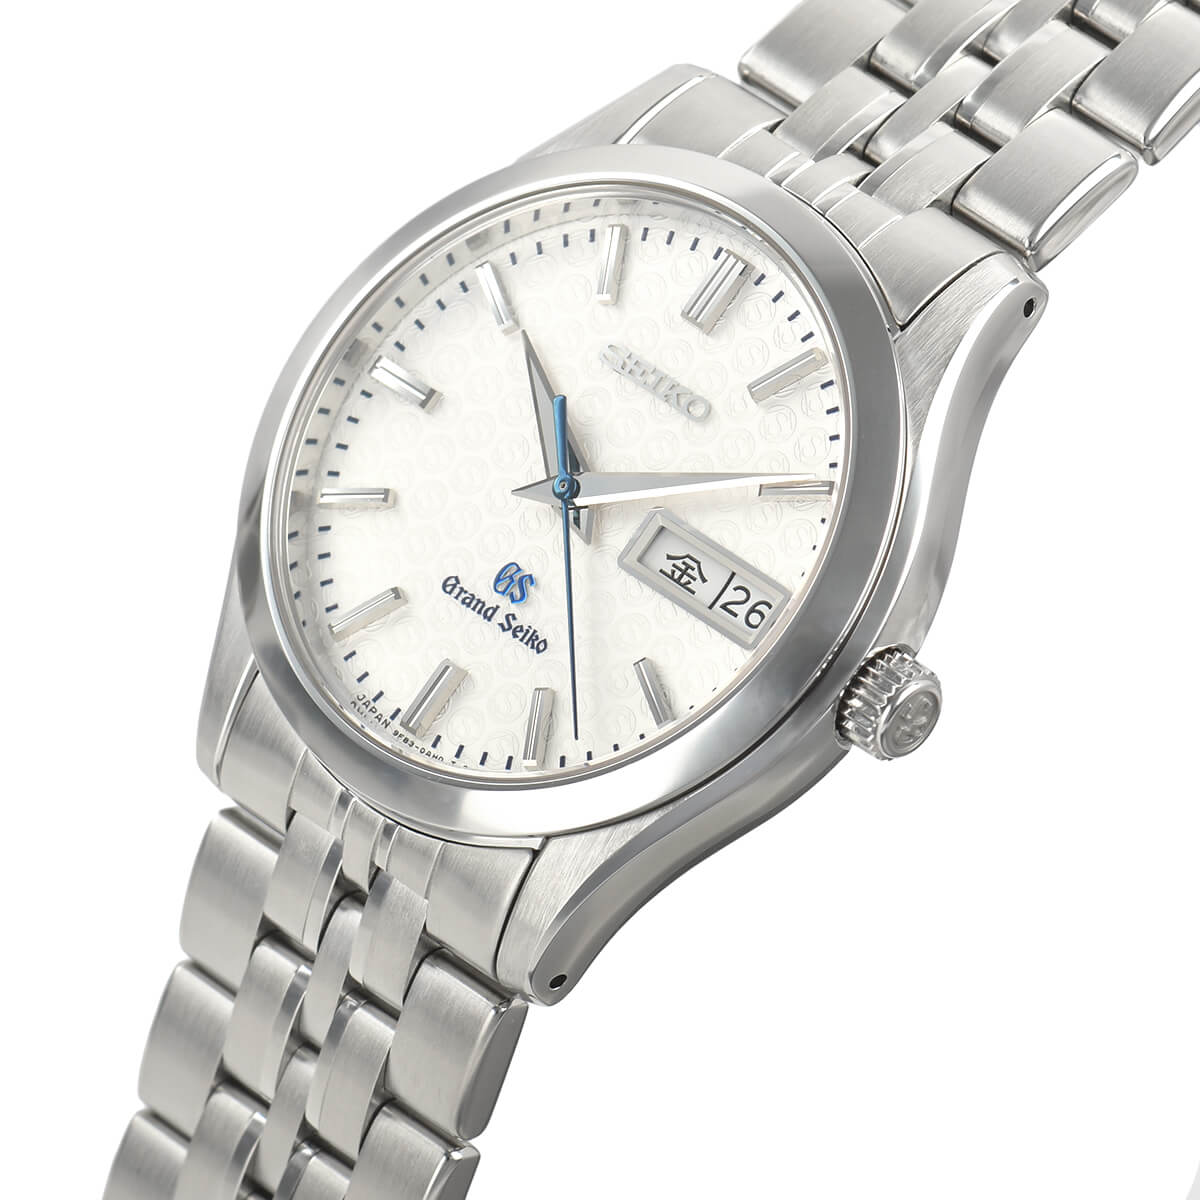 SALE 130周年 1000本限定  SEIKO セイコー  グランドセイコー  SBGT039 9F83-0AK0  メンズ 腕時計